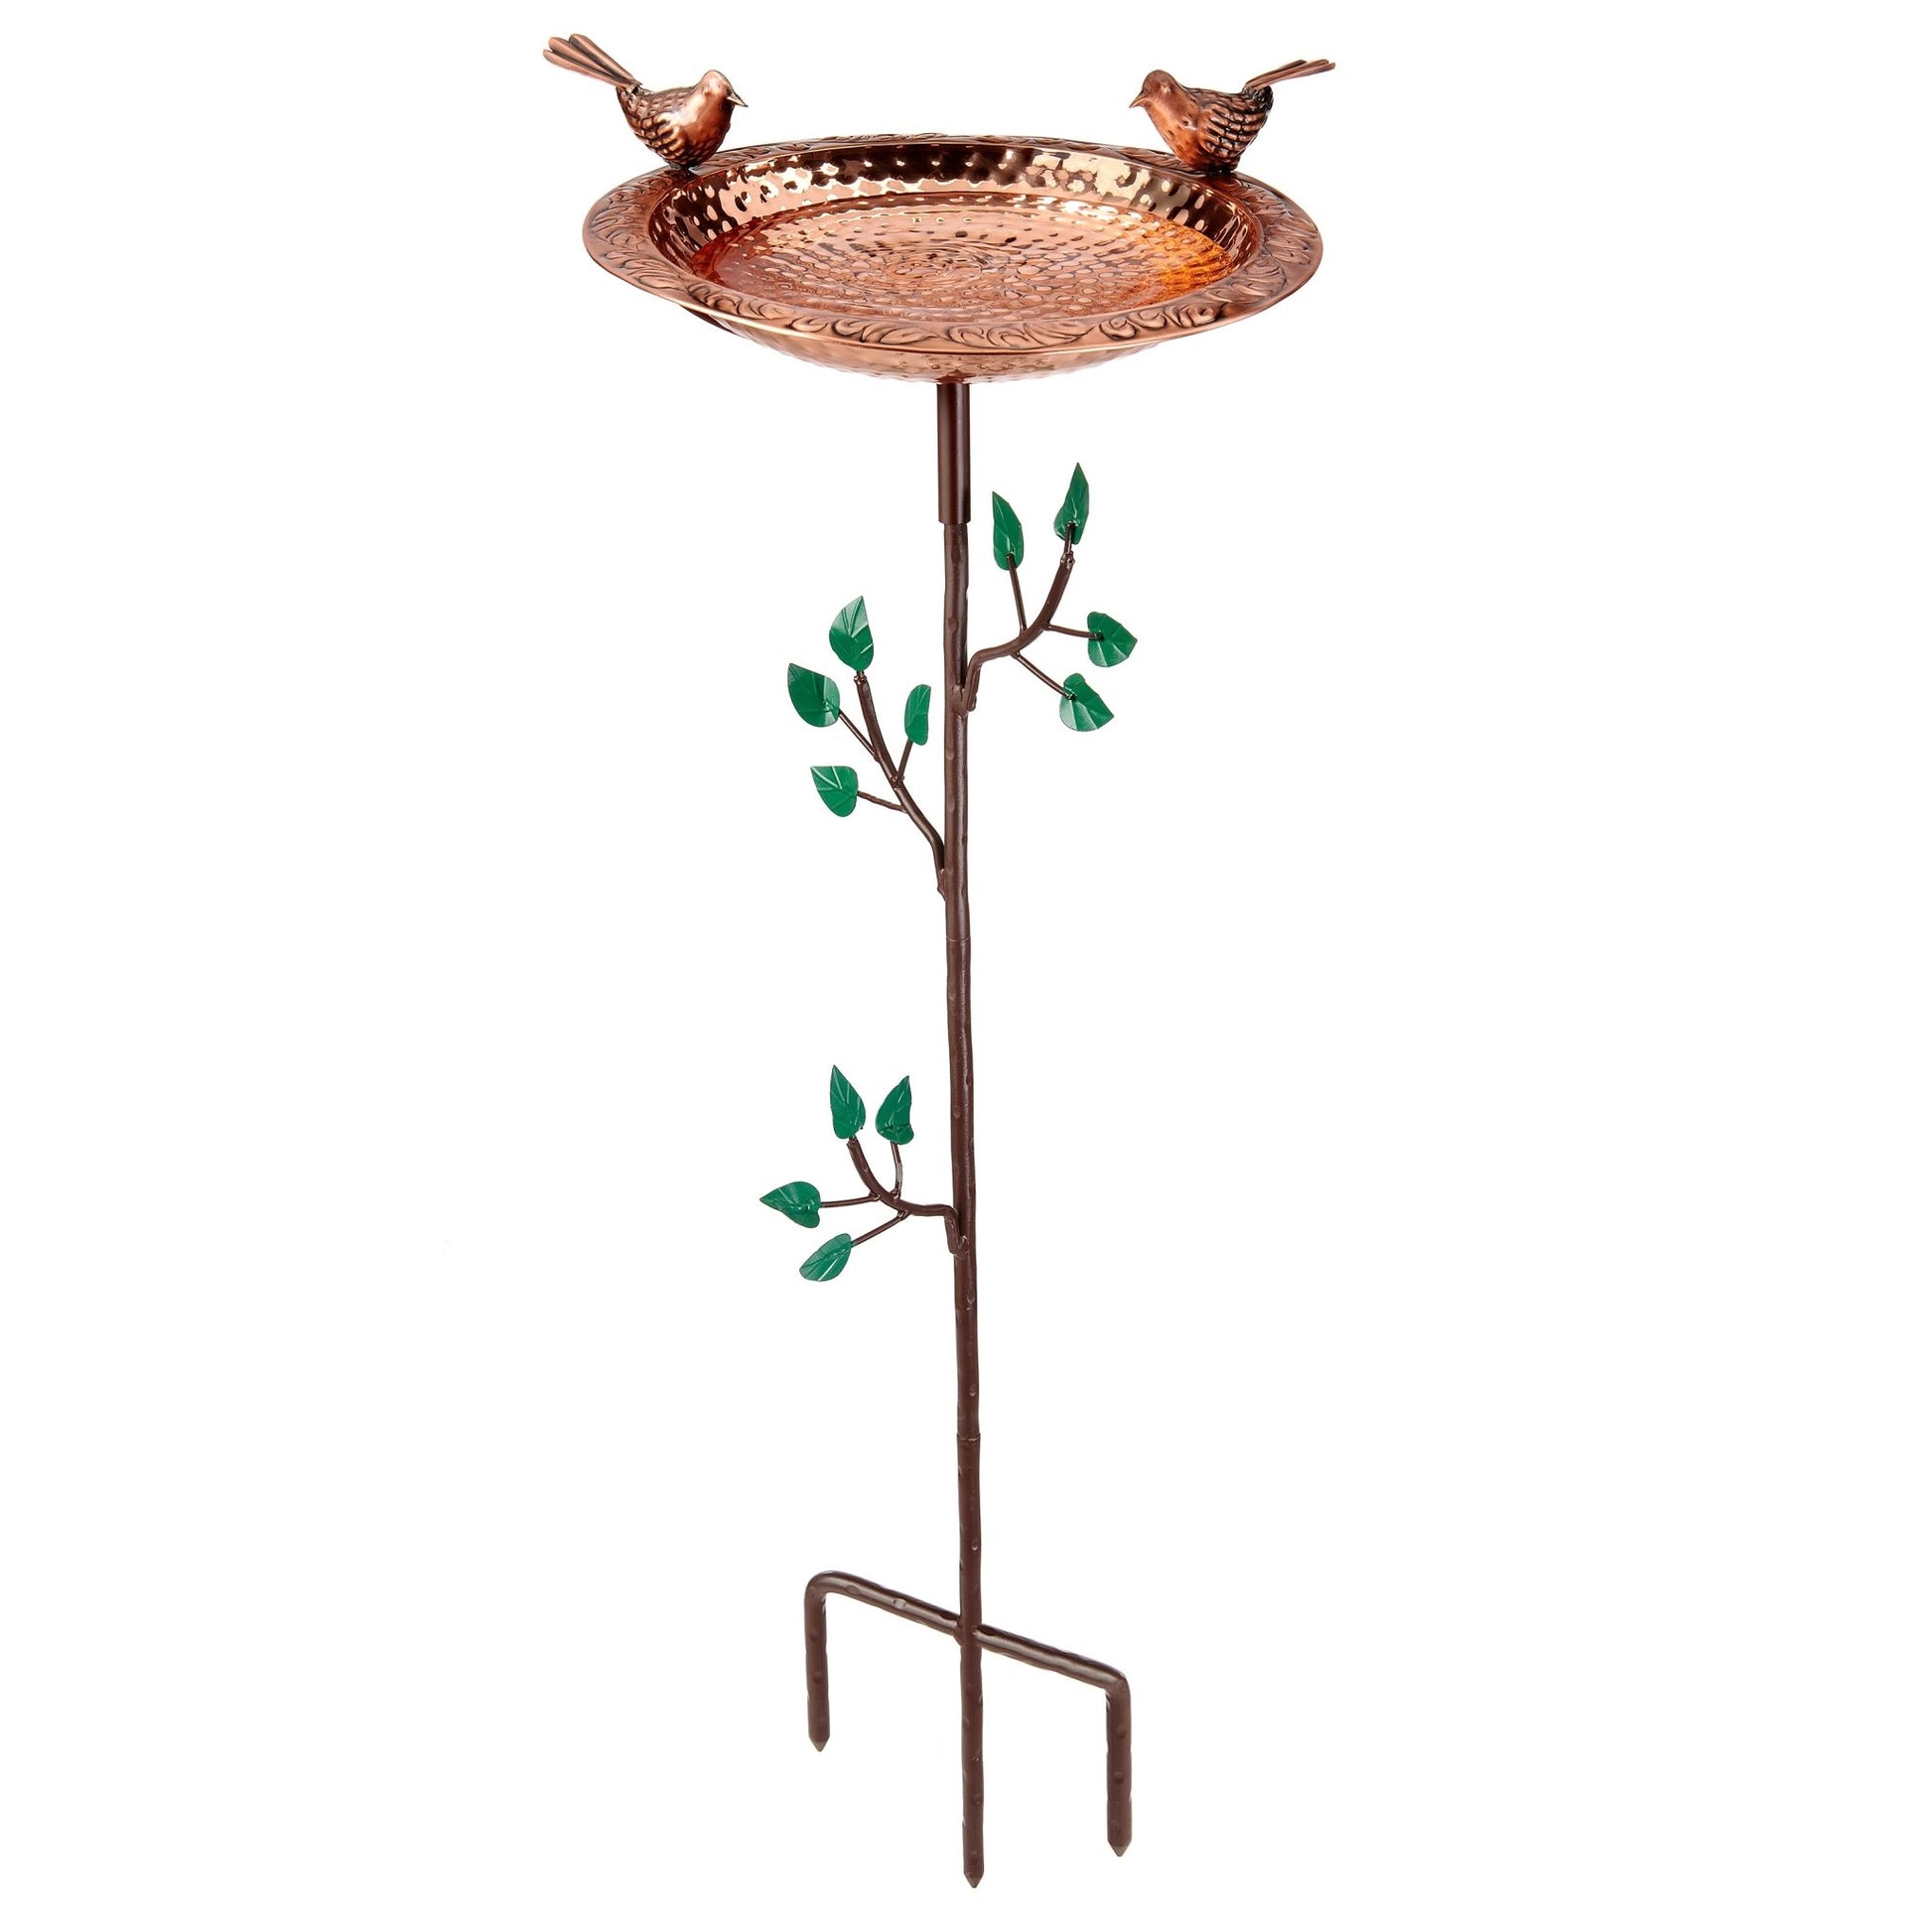 13.5” Birdbath with Copper Birds and Decorative Garden Pole - Good Directions